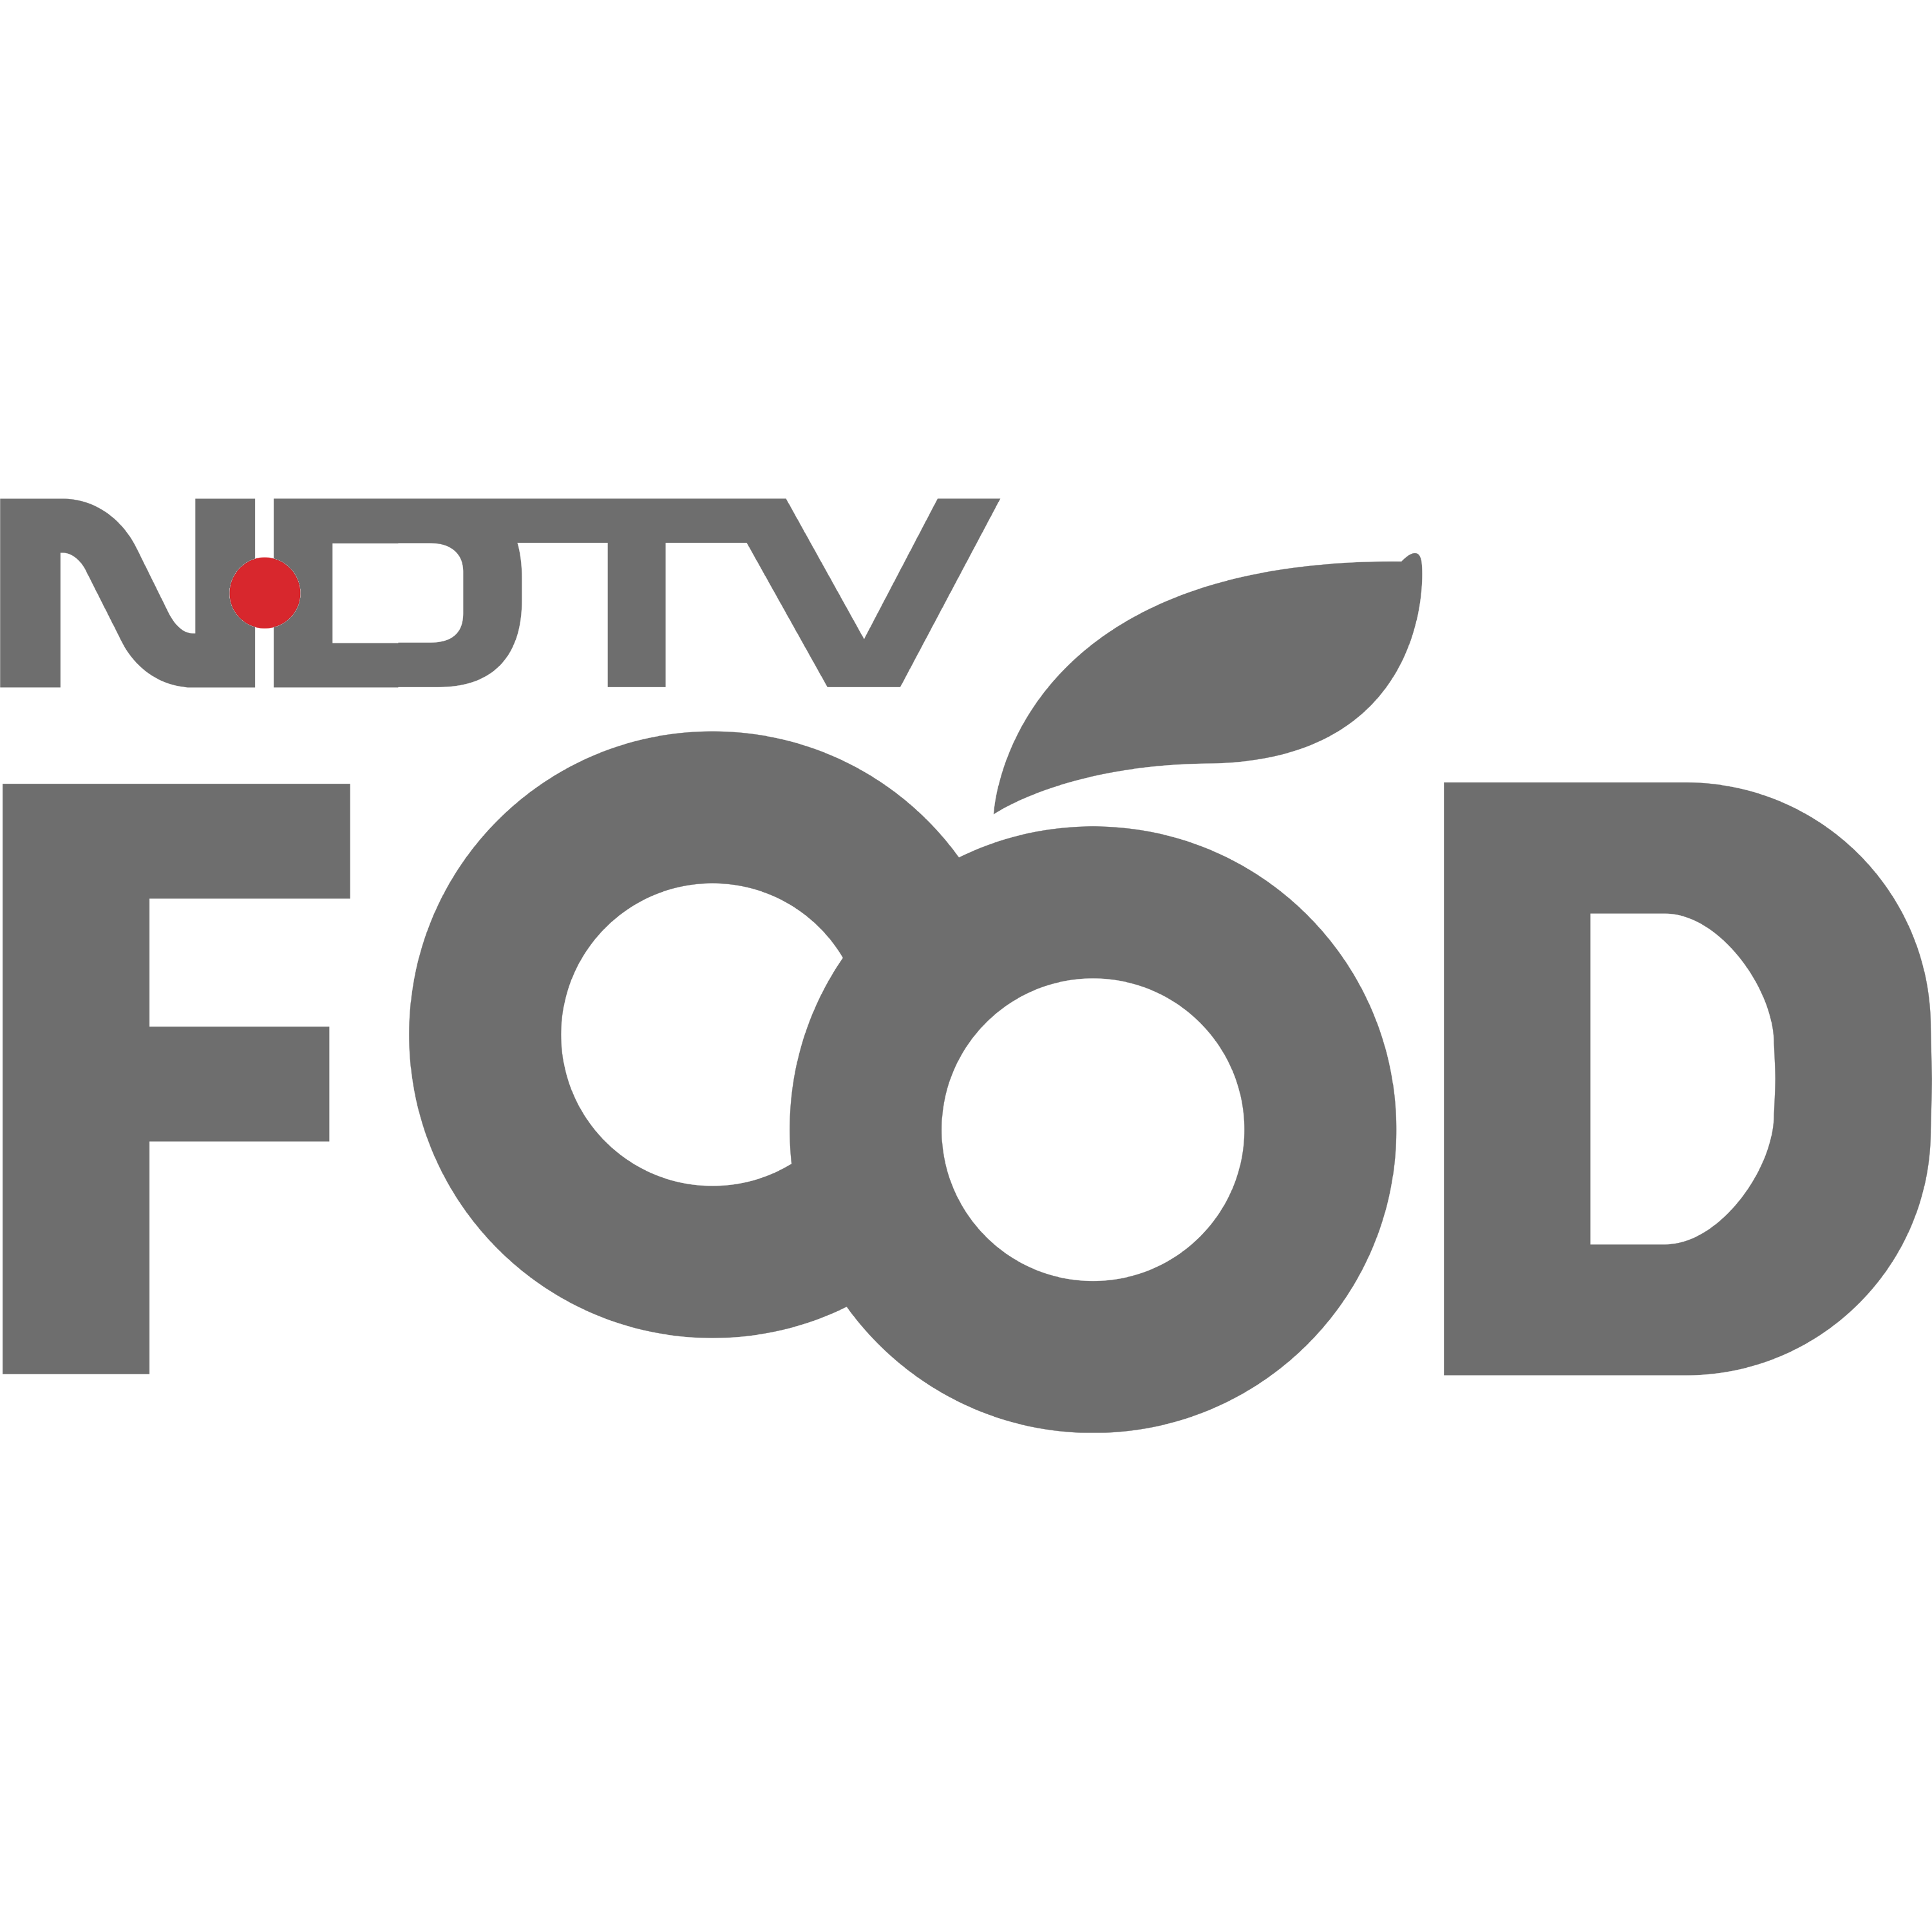 NDTV Food Logo Transparent Picture